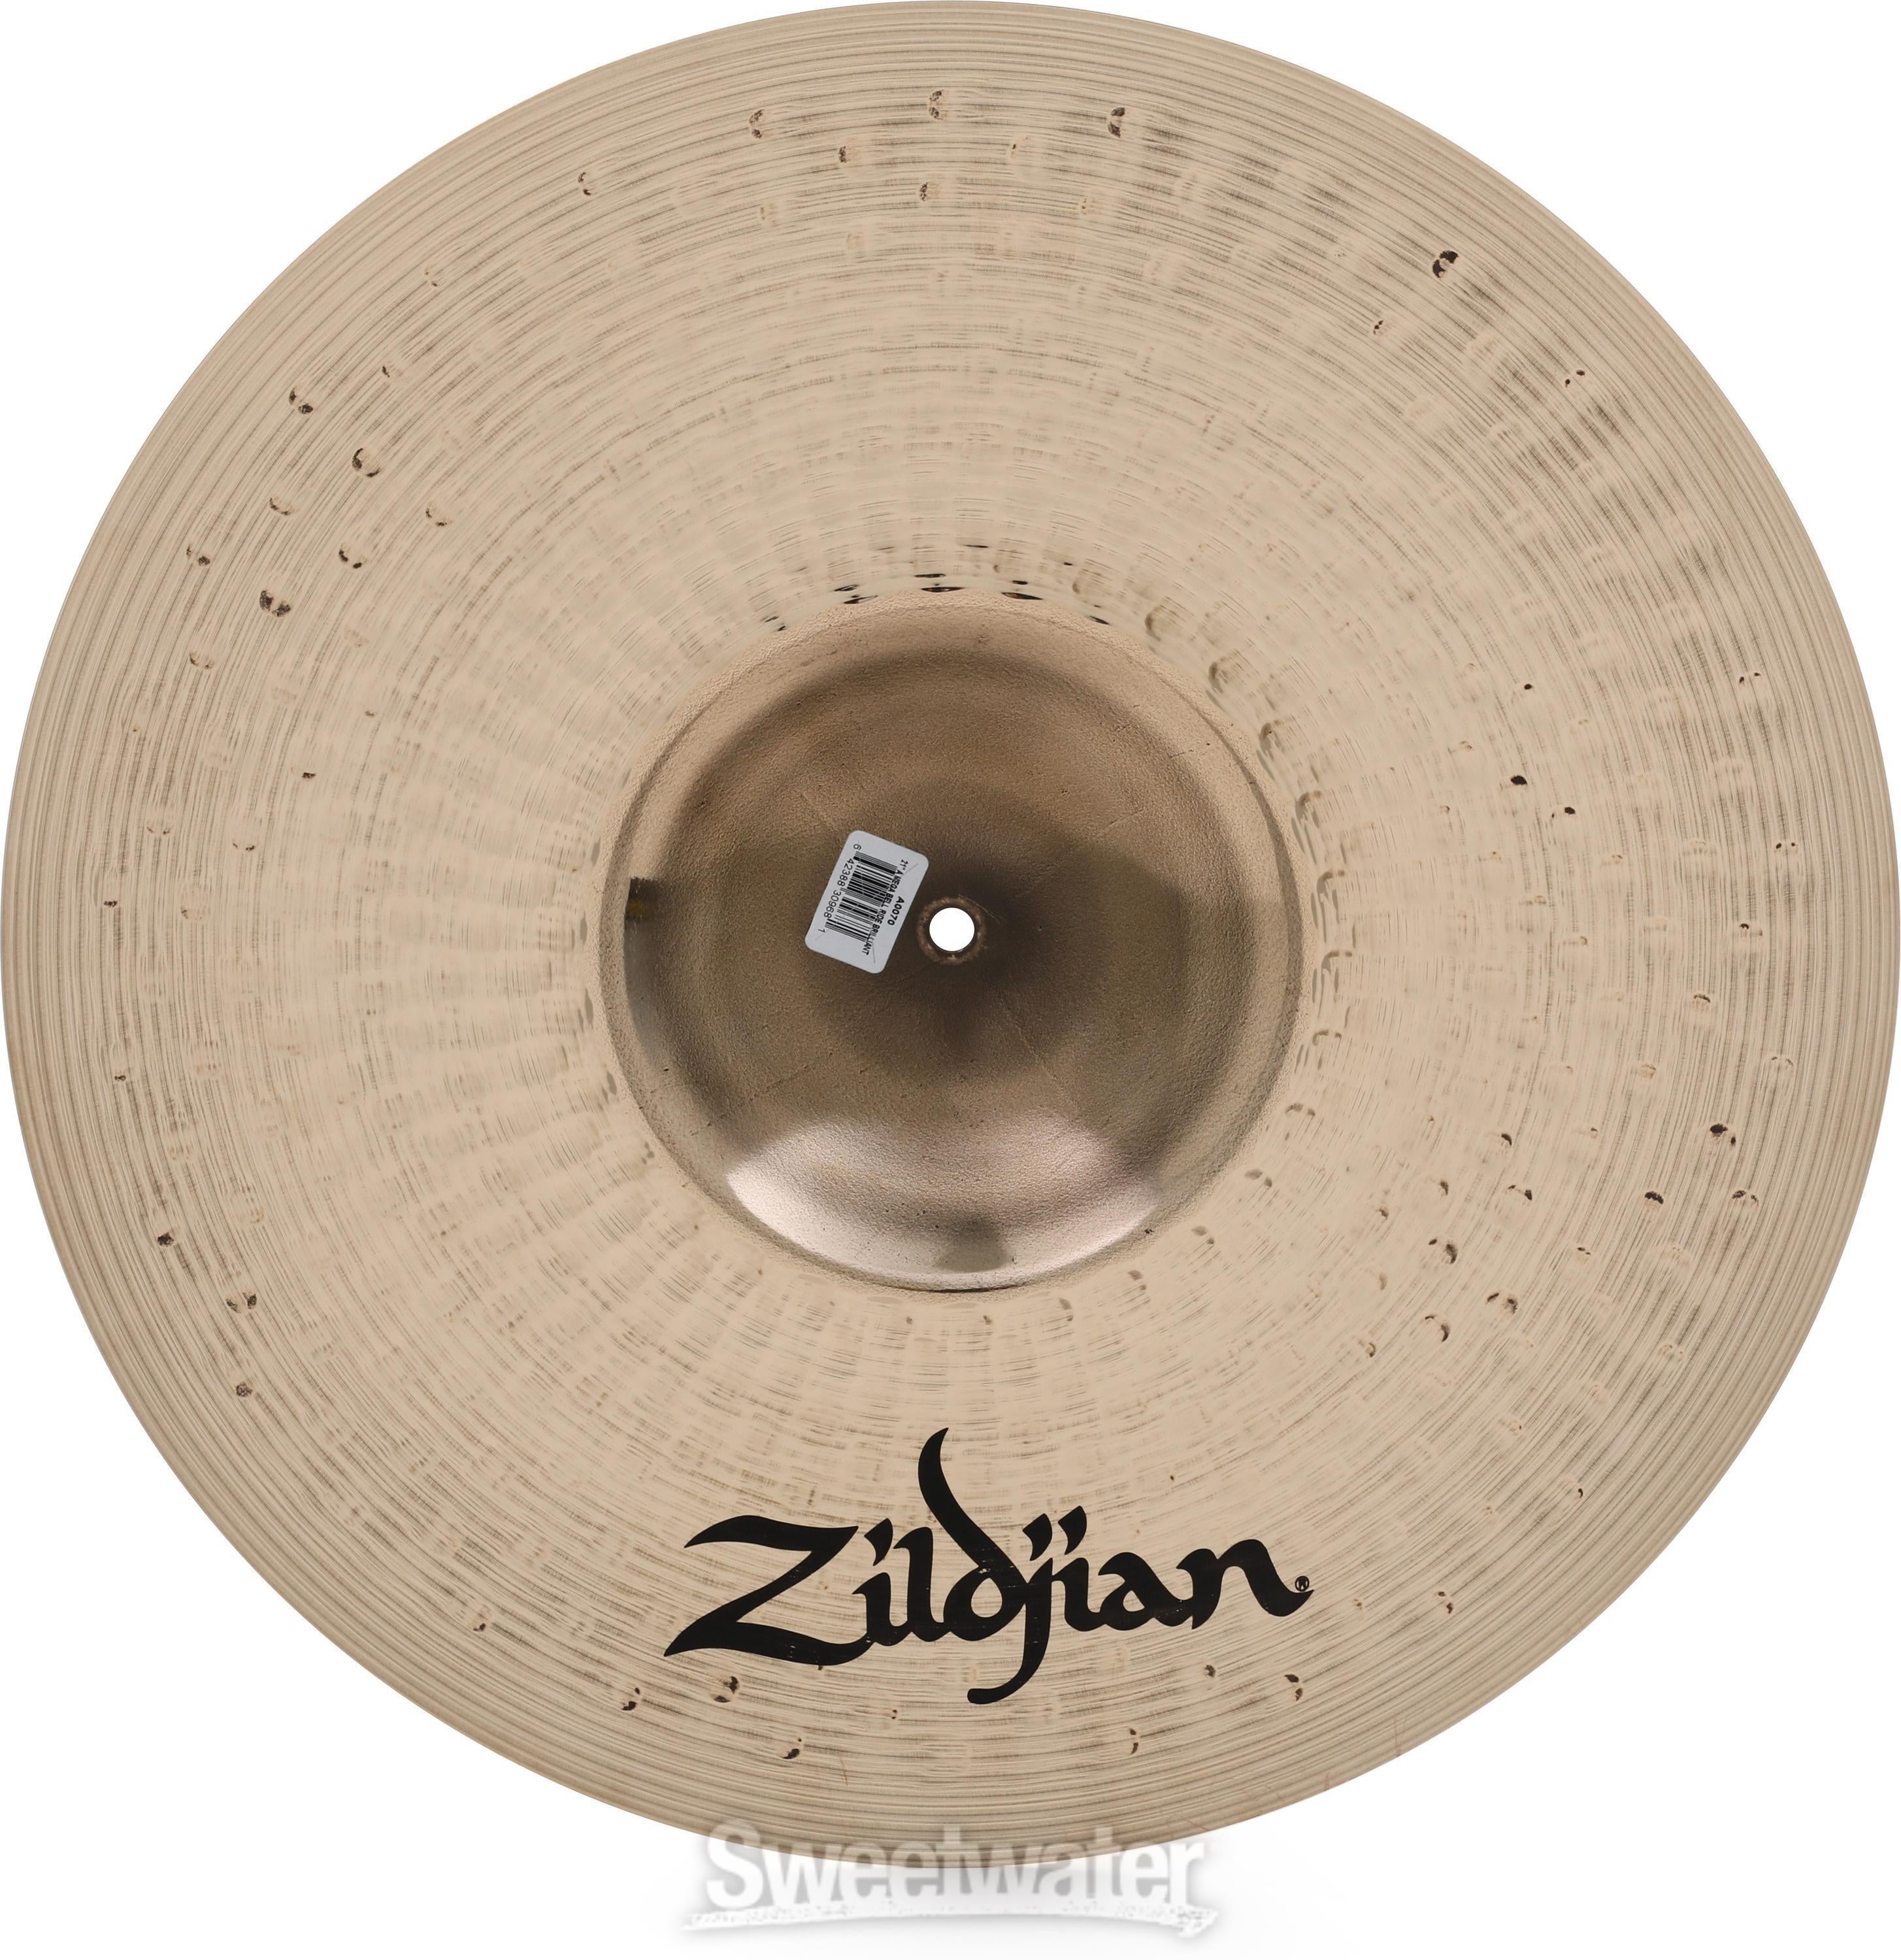 Zildjian 21-inch A Zildjian Mega Bell Ride Cymbal | Sweetwater